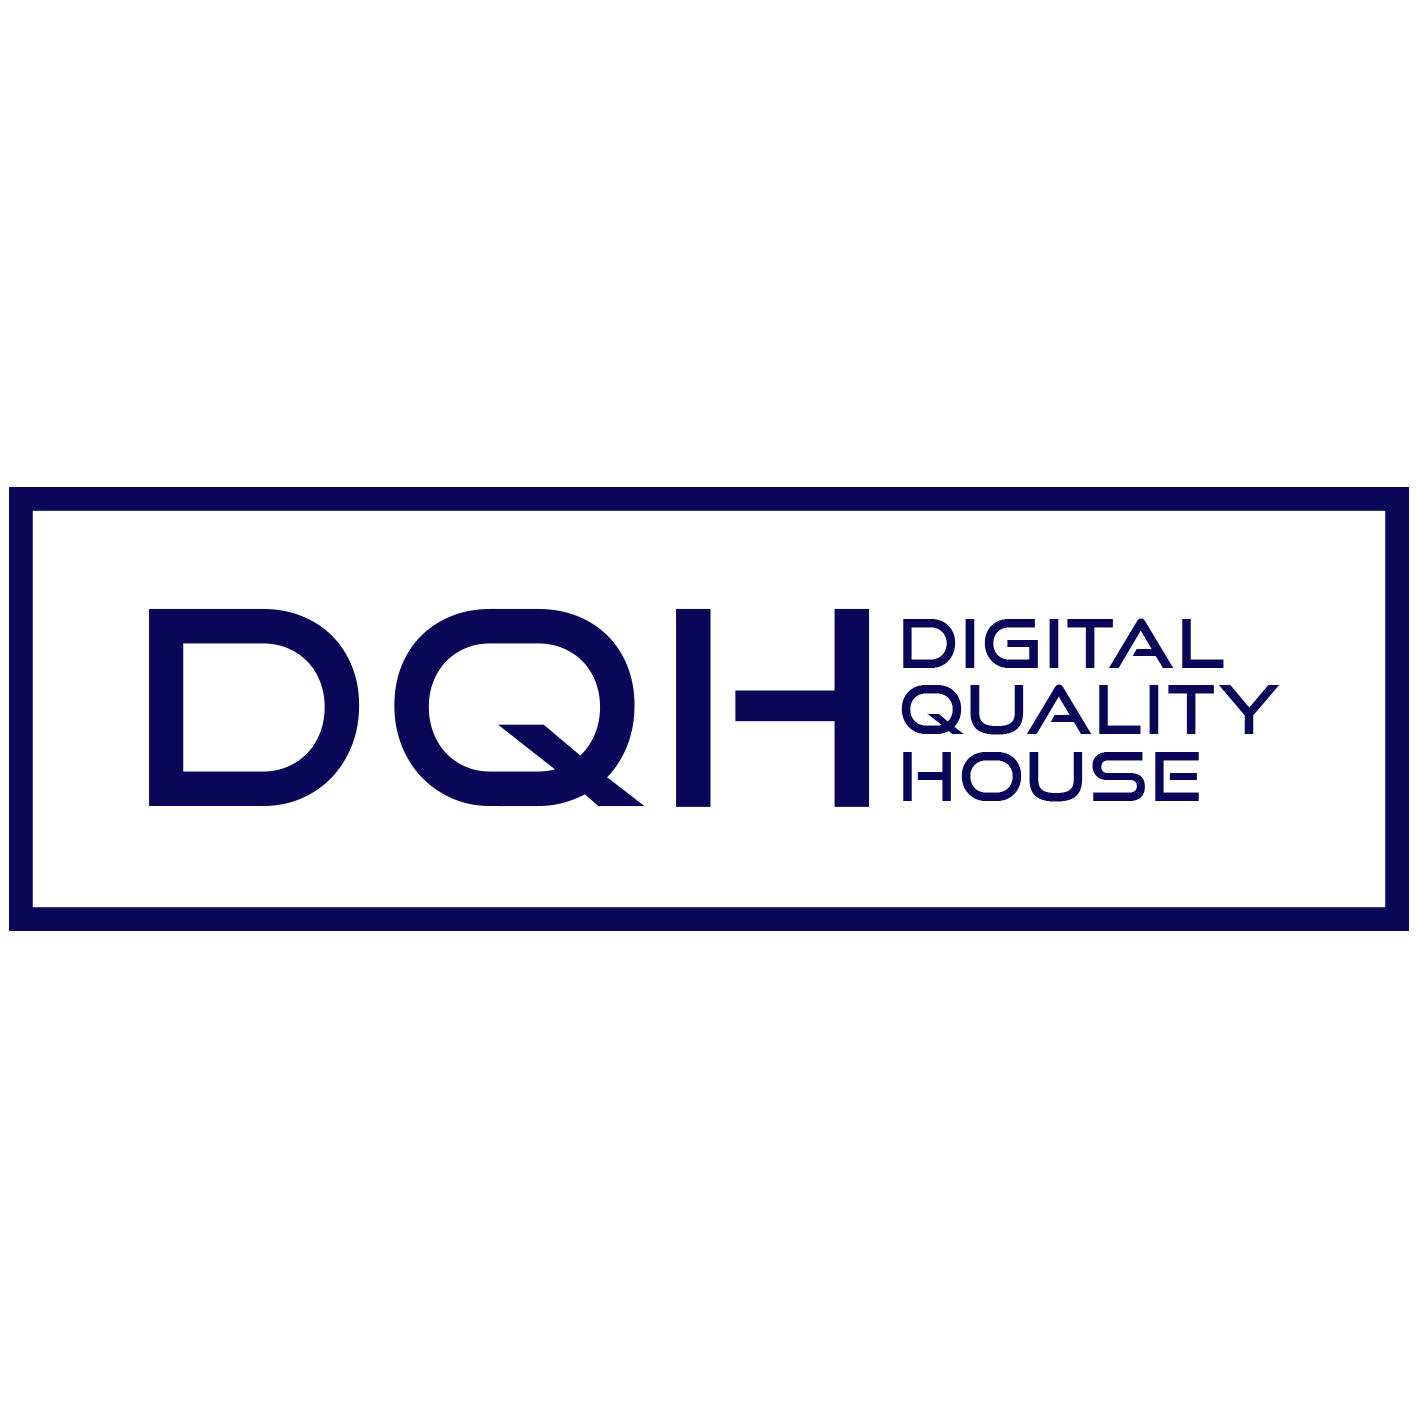 Digital Quality House